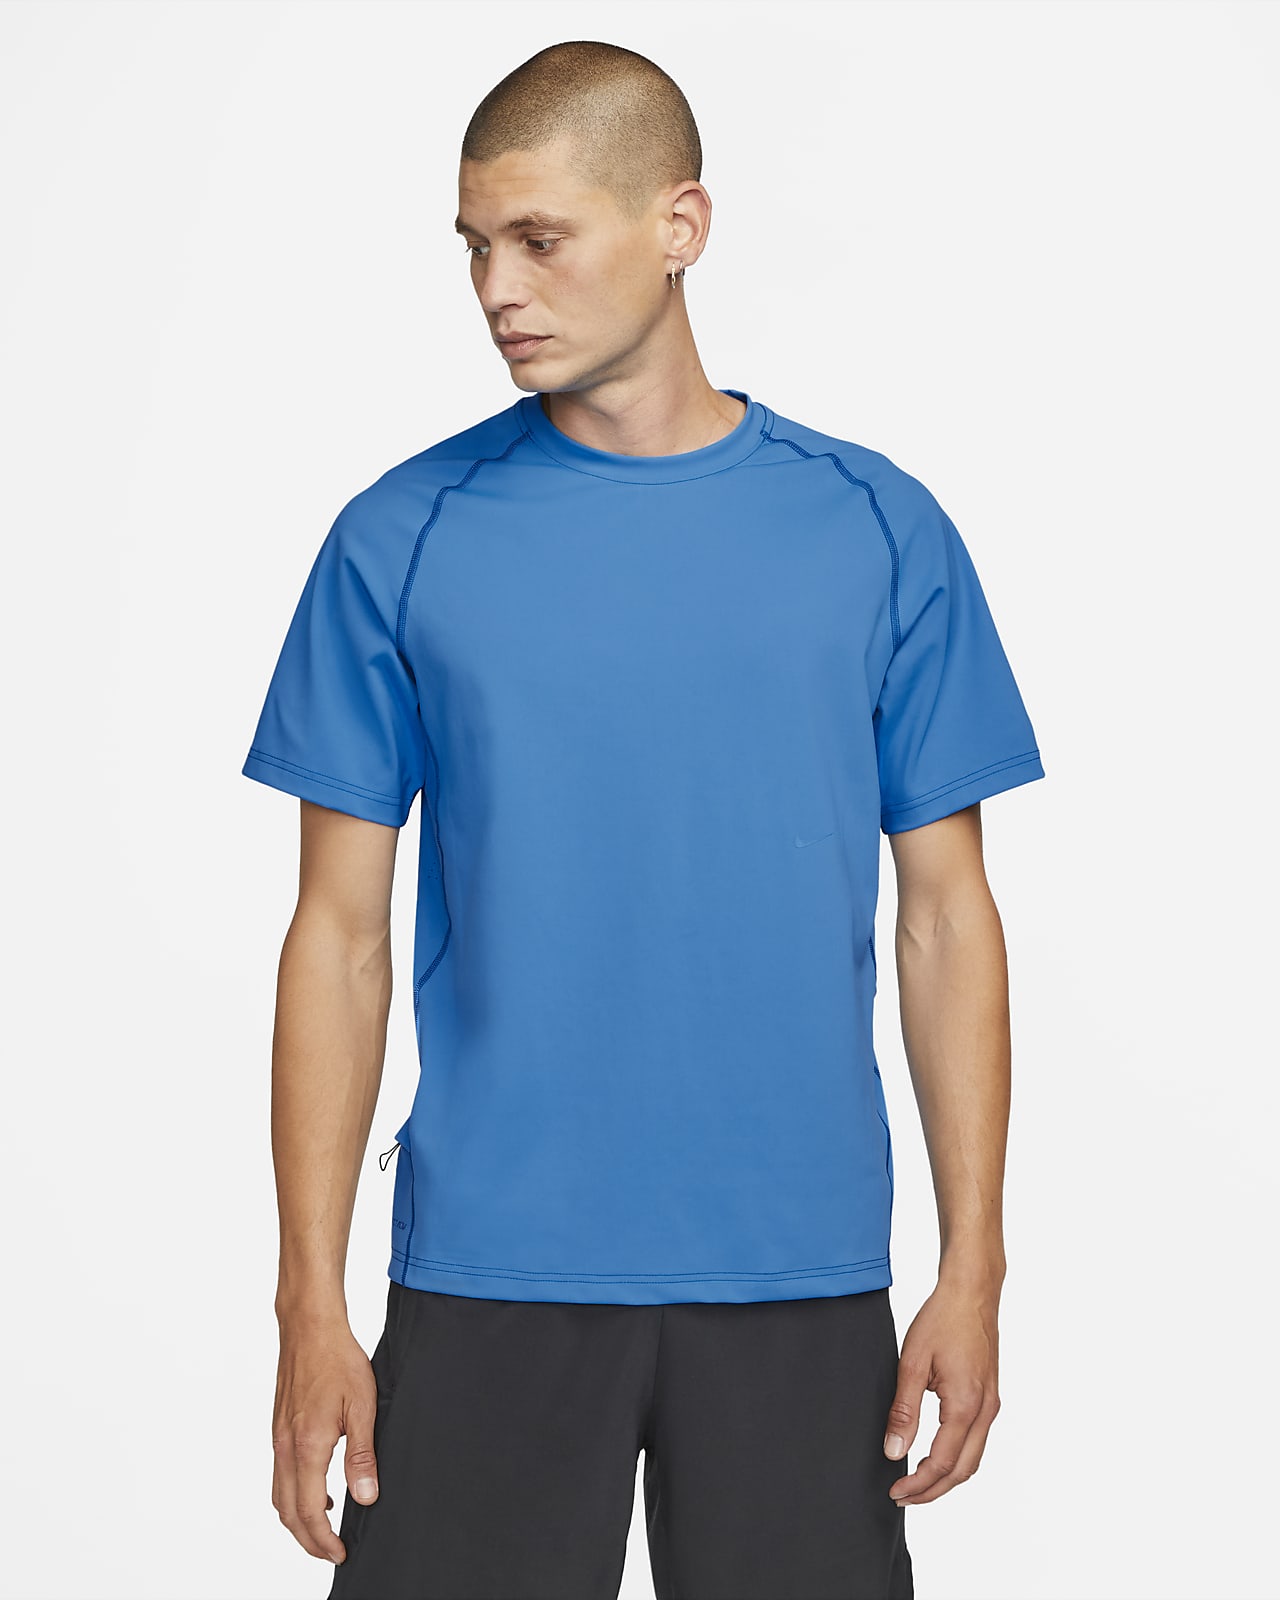 Nike Dri-FIT ADV A.P.S. Men's Short-Sleeve Fitness Top. Nike LU